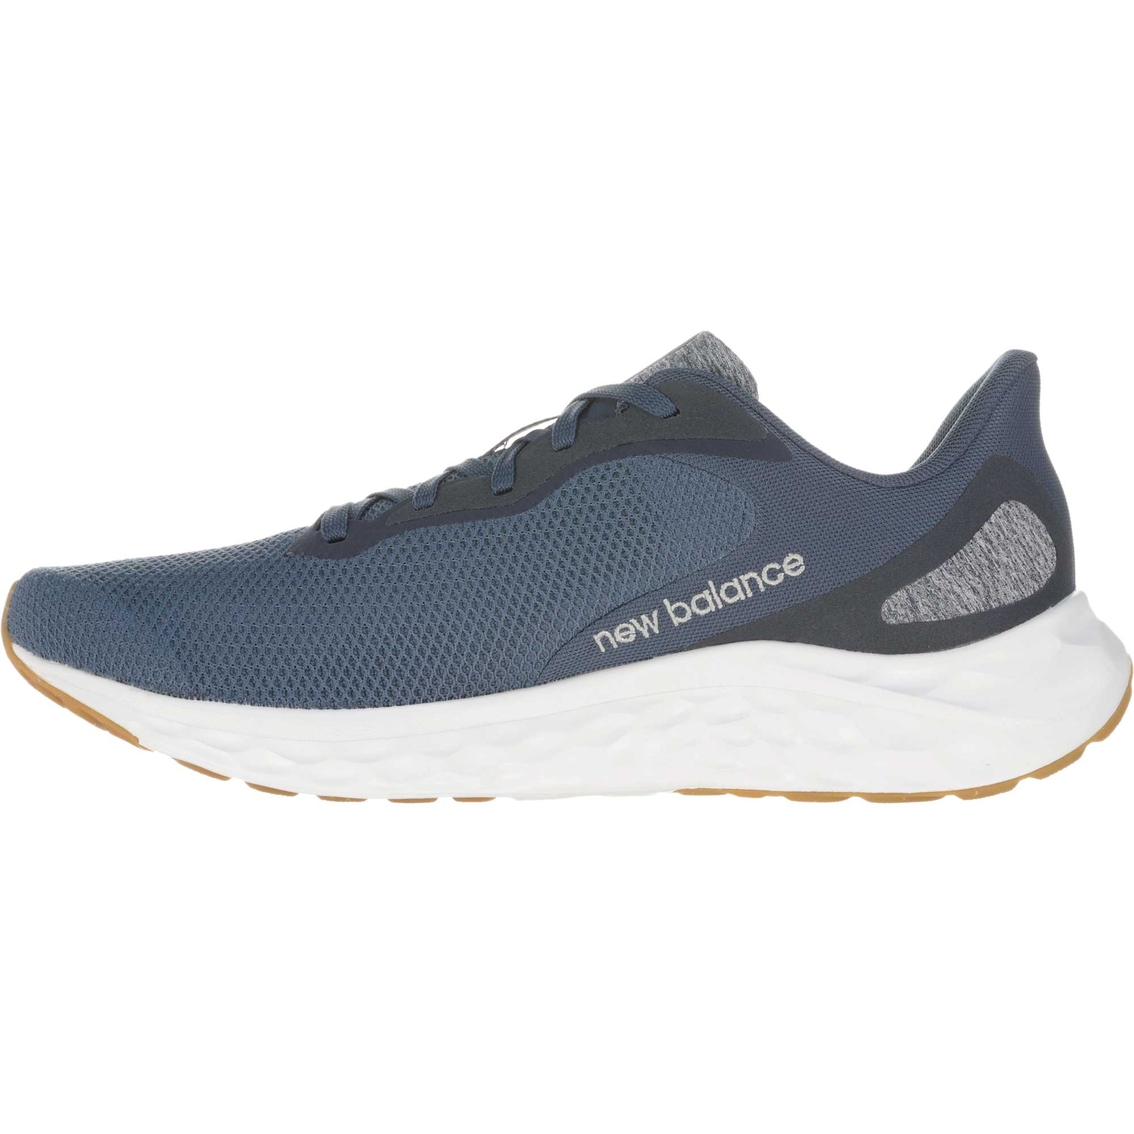 New Balance Men's MARISEG4 Running Shoes - Image 2 of 3